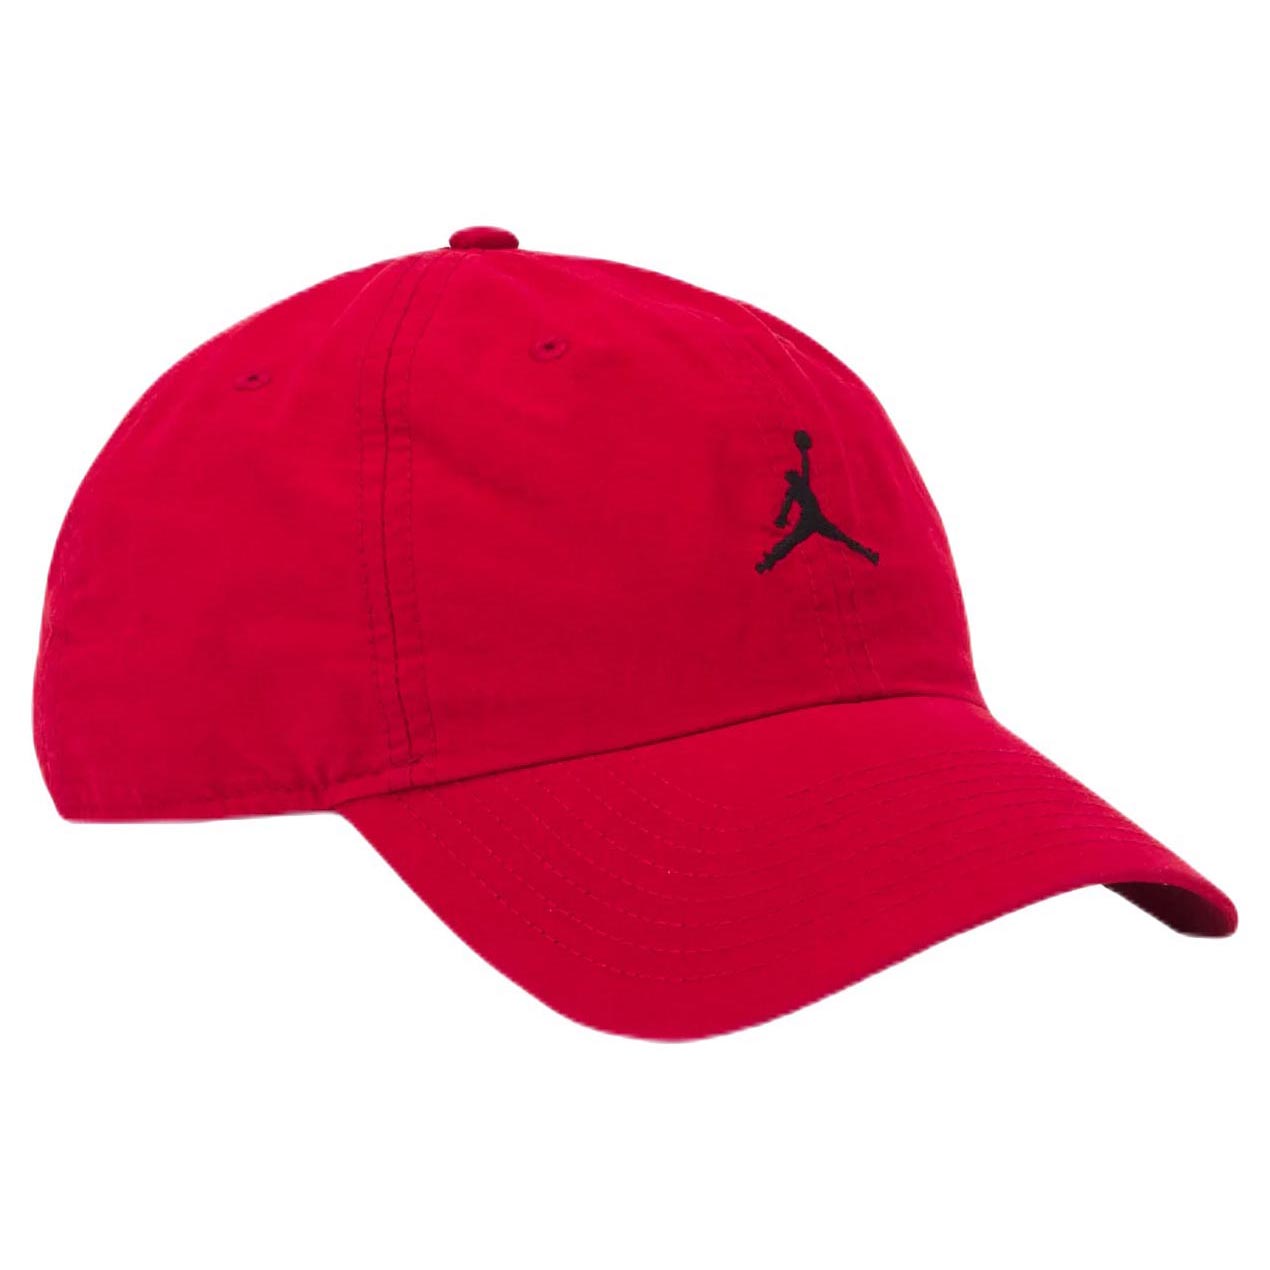 Кепка Nike Air Jordan Jumpman Heritage86, красный кепка nike air jordan jumpman heritage86 красный